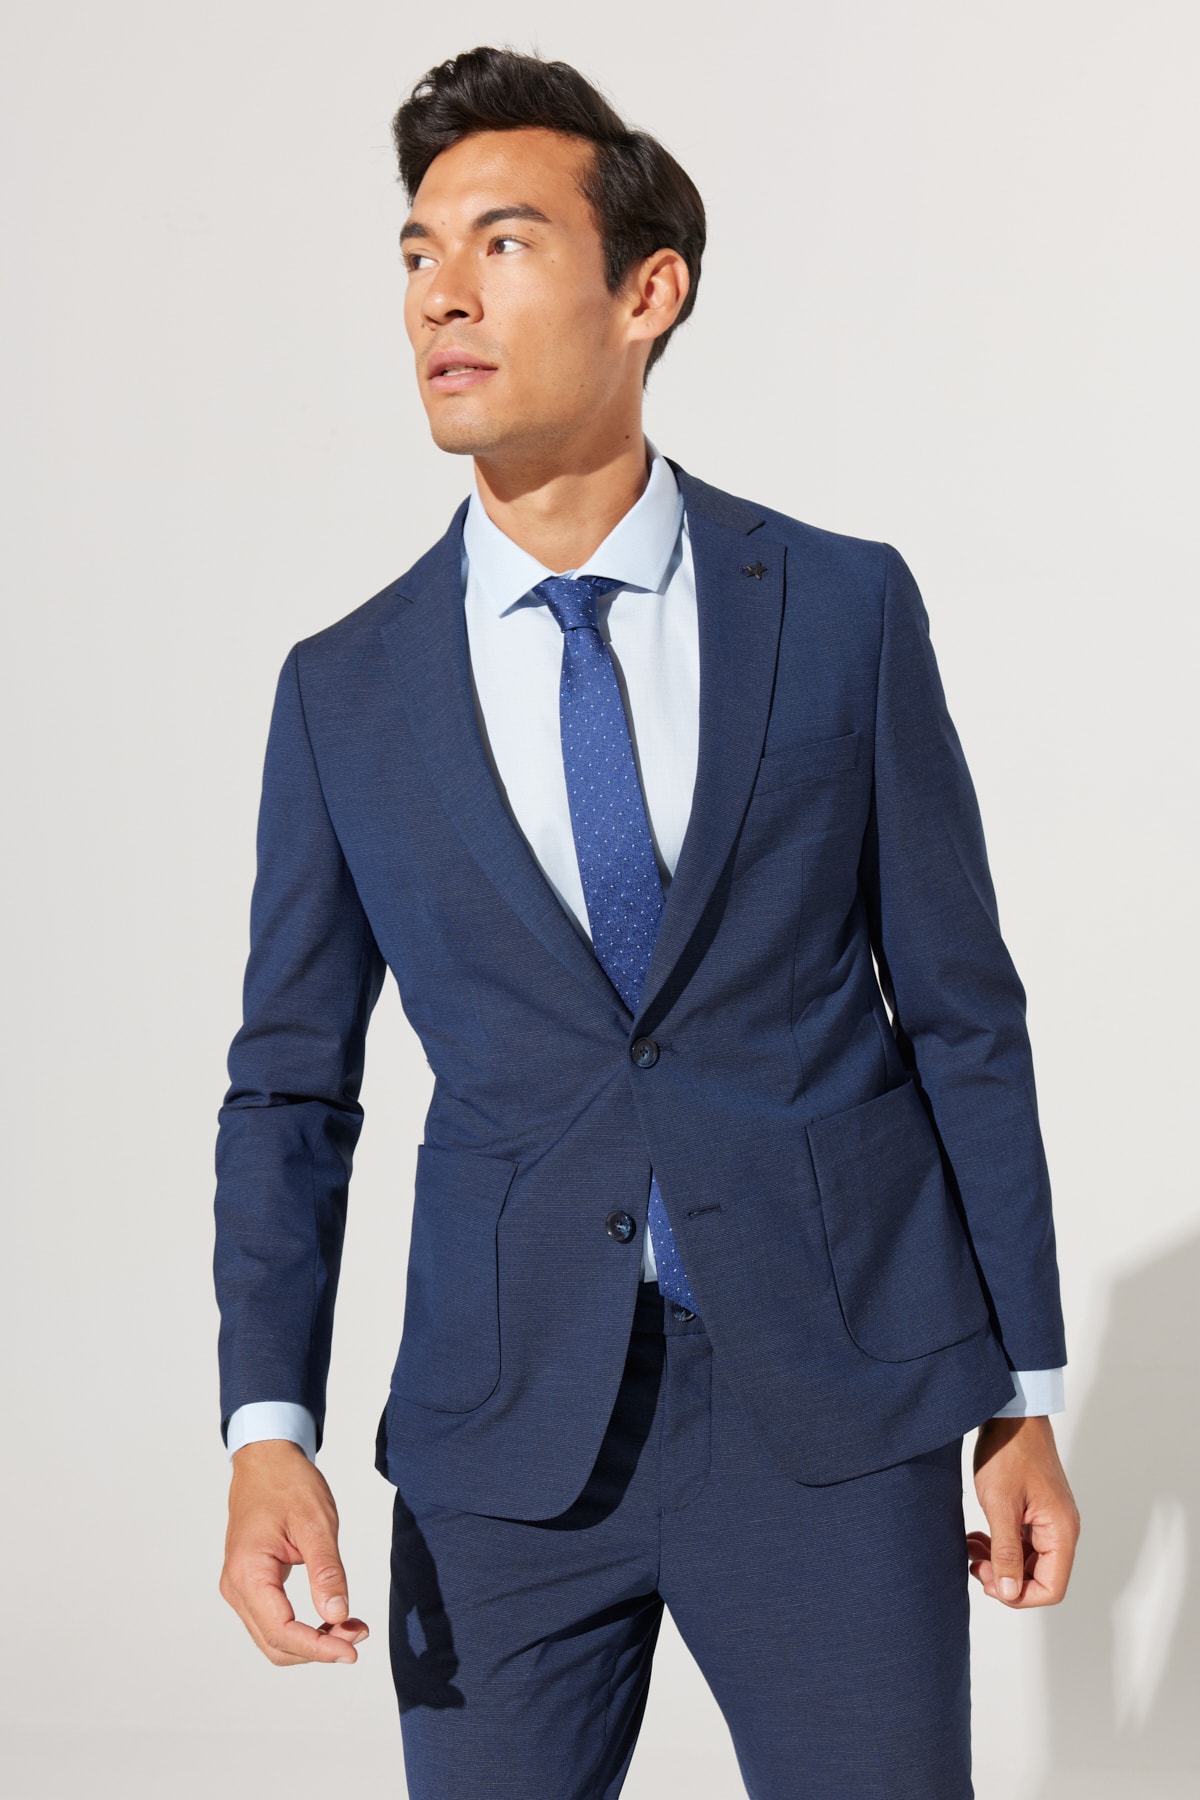 ALTINYILDIZ CLASSICS Men's Navy Blue Extra Slim Fit Slim Fit Mono Collar Patterned Suit